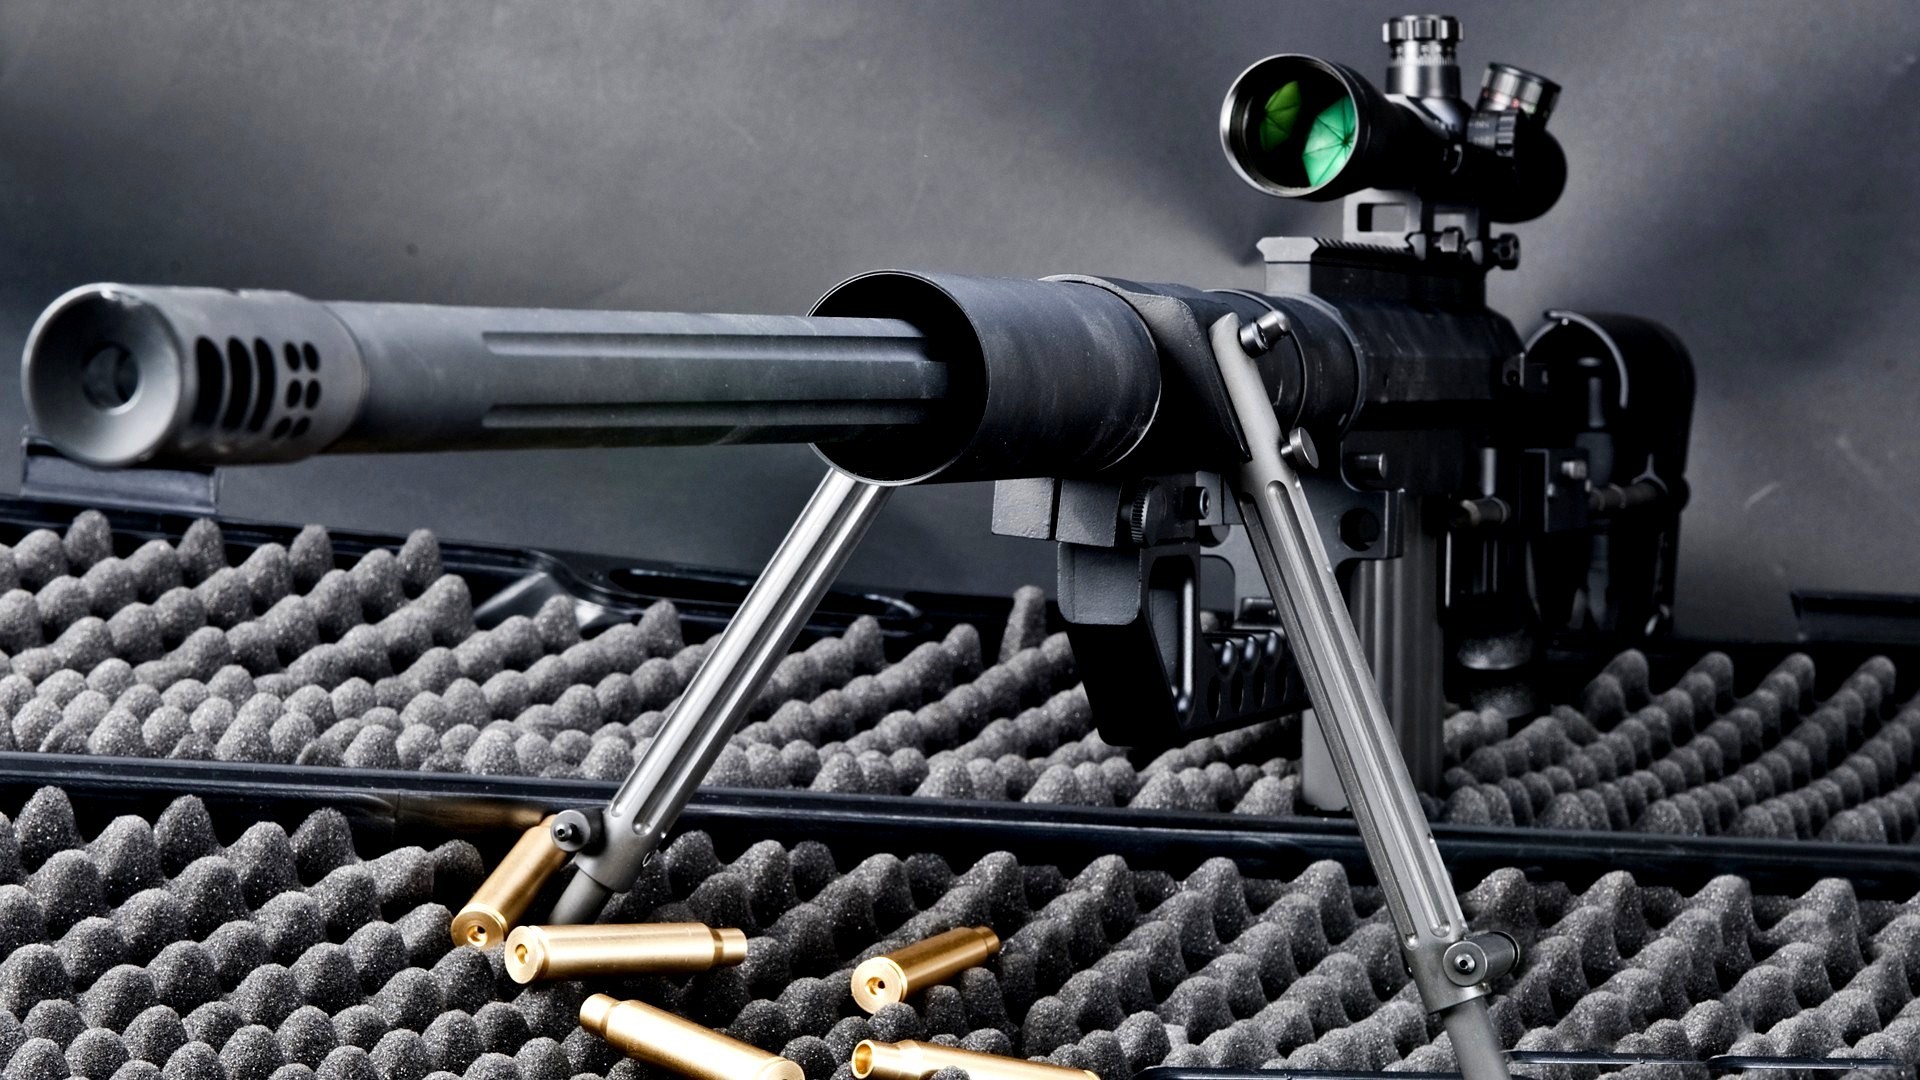 1920x1080 Sniper Rifle Desktop Wallpaper 49430